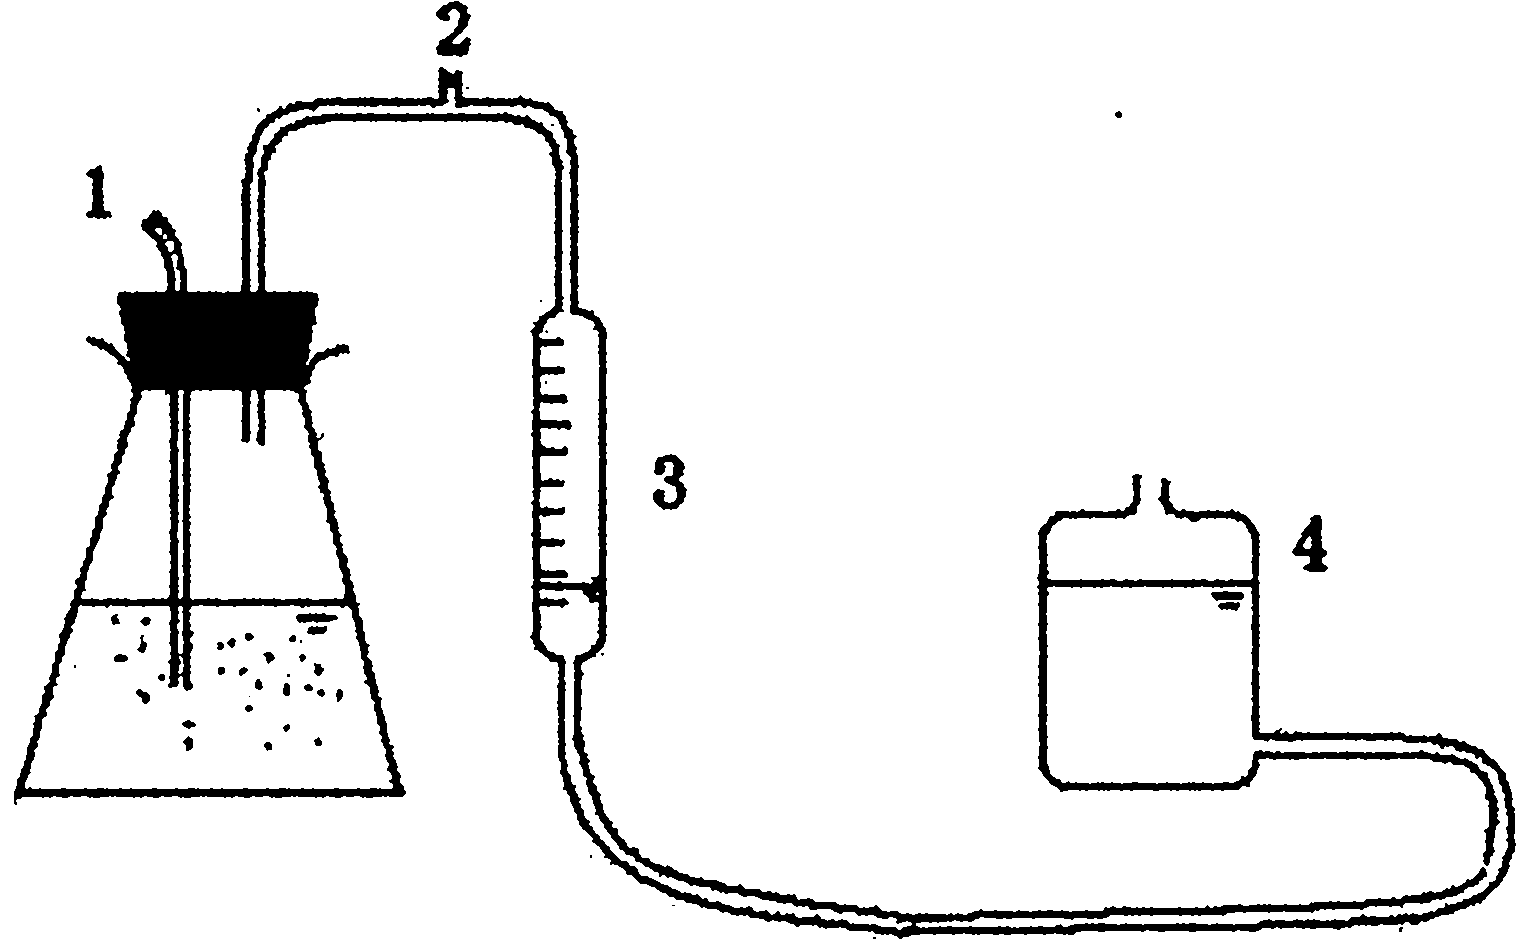 Method for producing hydrogen by fermenting special anaerobic clostridium butyricum